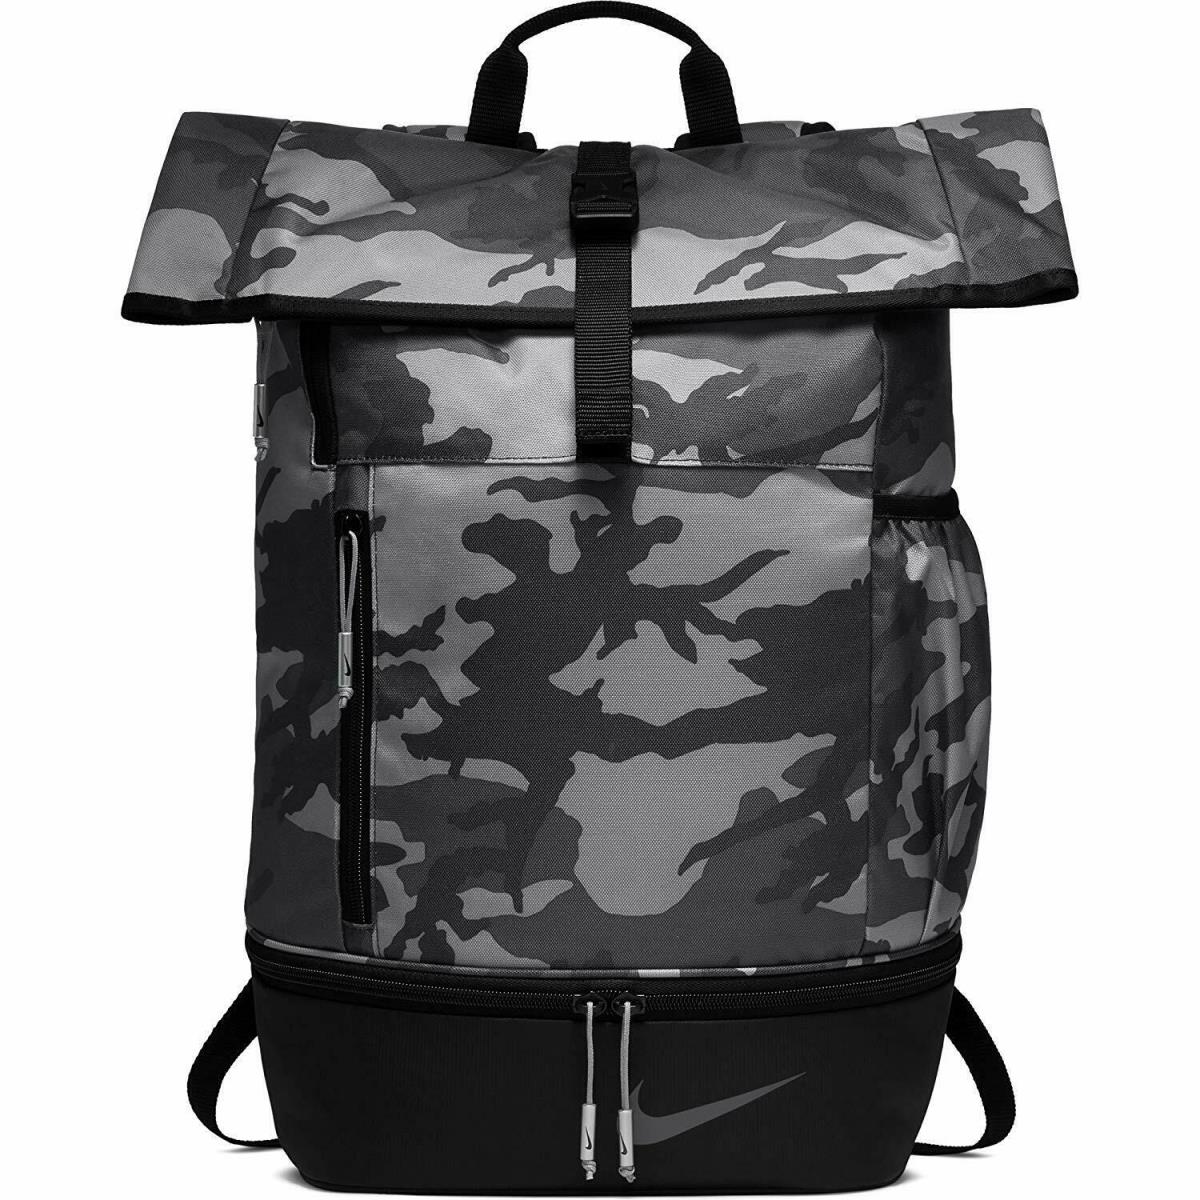 Nike Sport All Over Print Golf Backpack BA5756 036 Anthracite/black 1587 CU IN